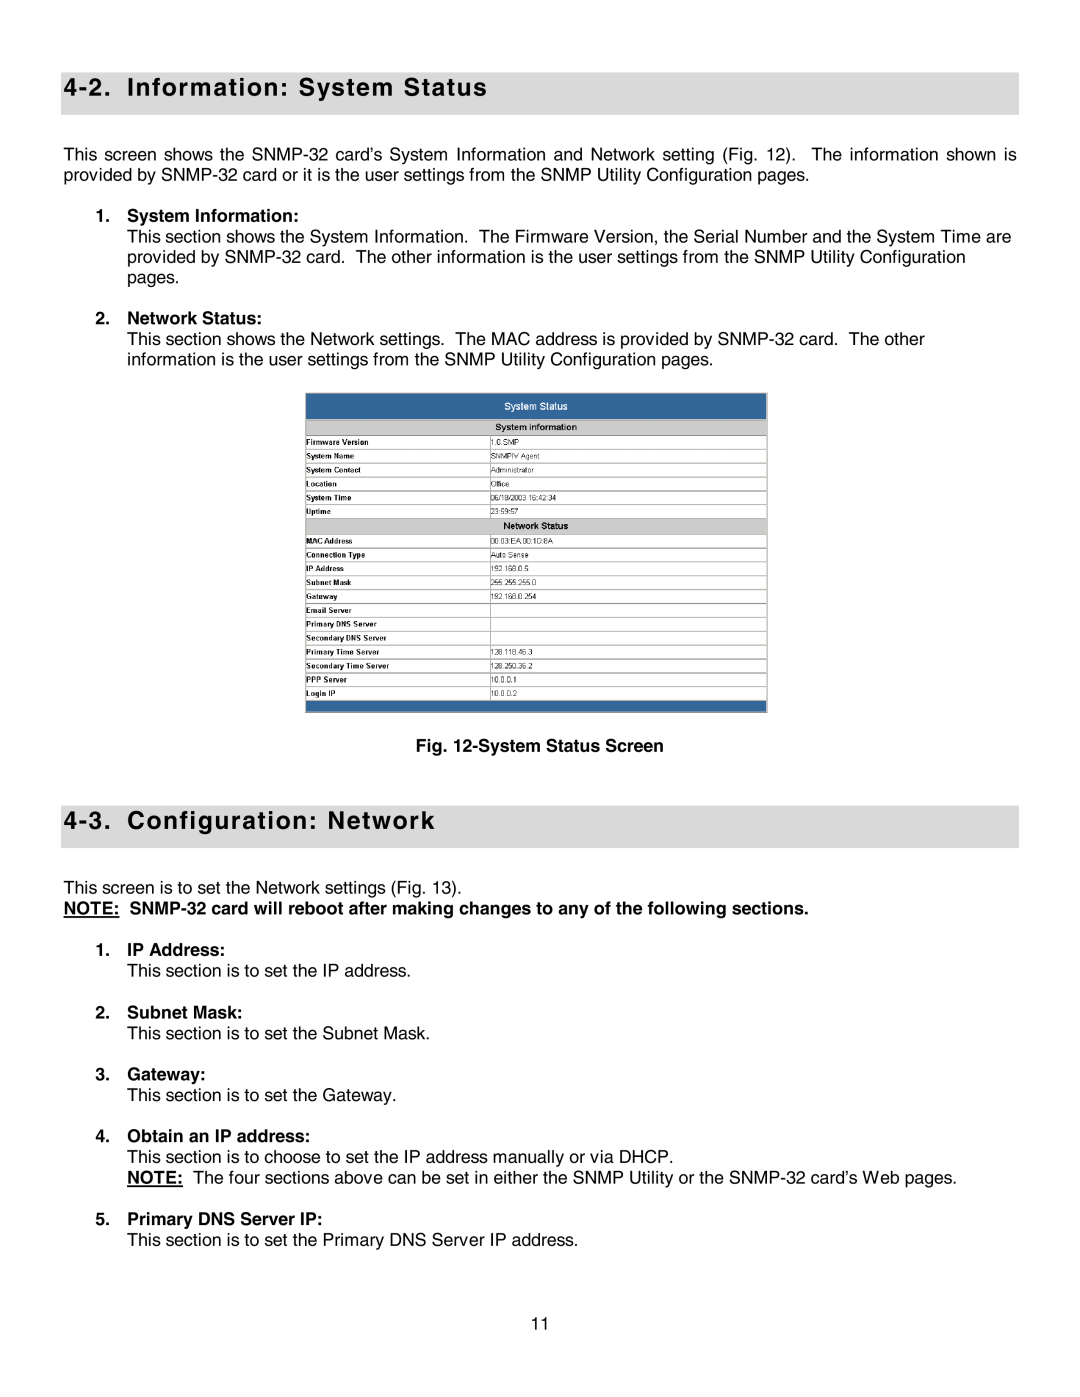 Minuteman UPS SNMP-32 Series Information System Status, Configuration Network, System Information, Network Status, Gateway 